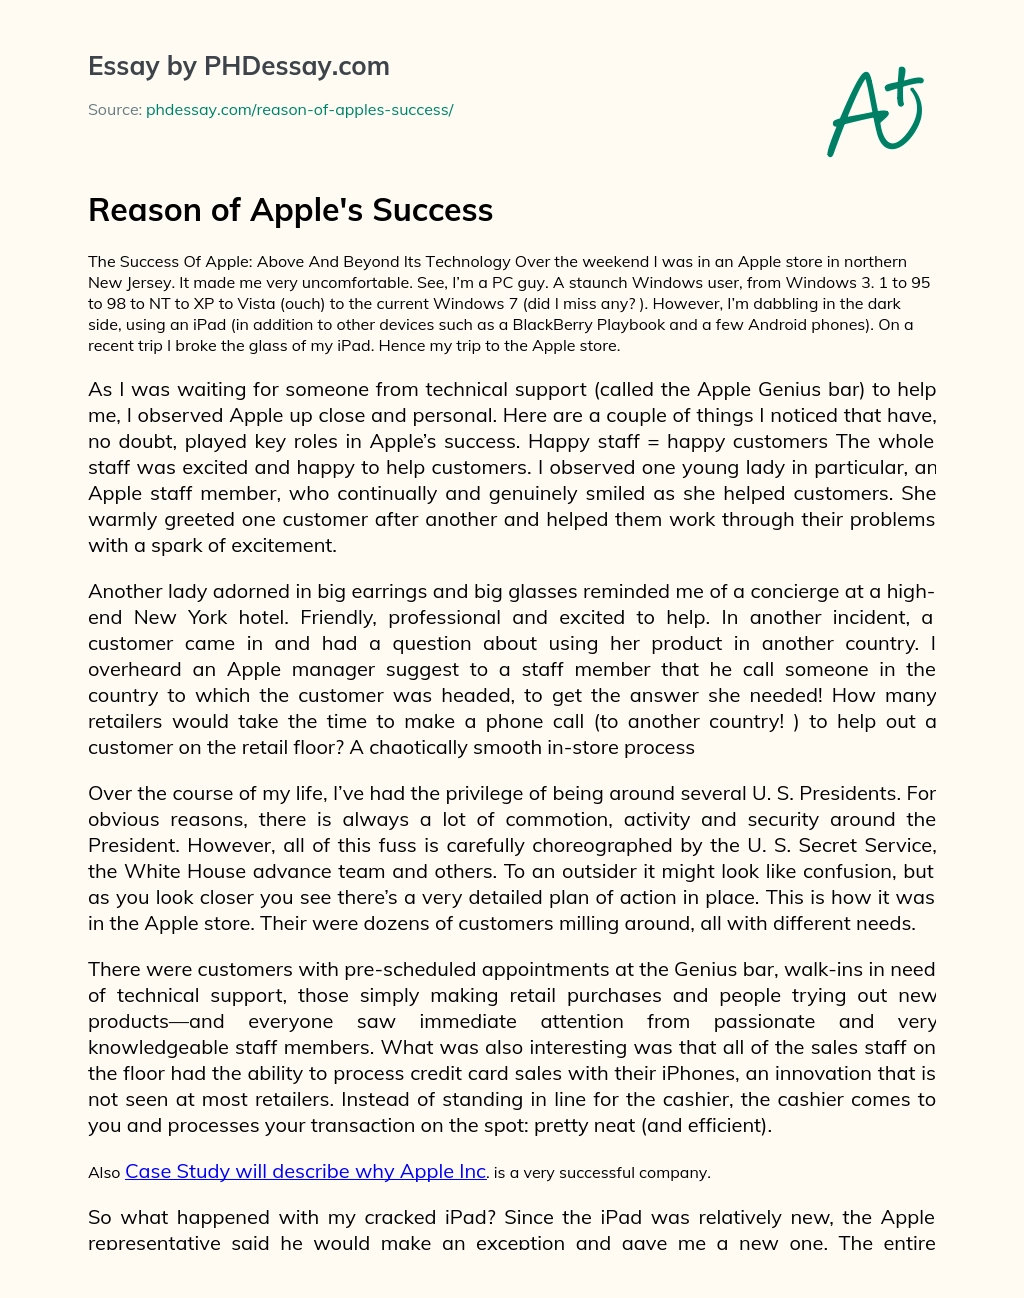 Reason of Apple’s Success essay